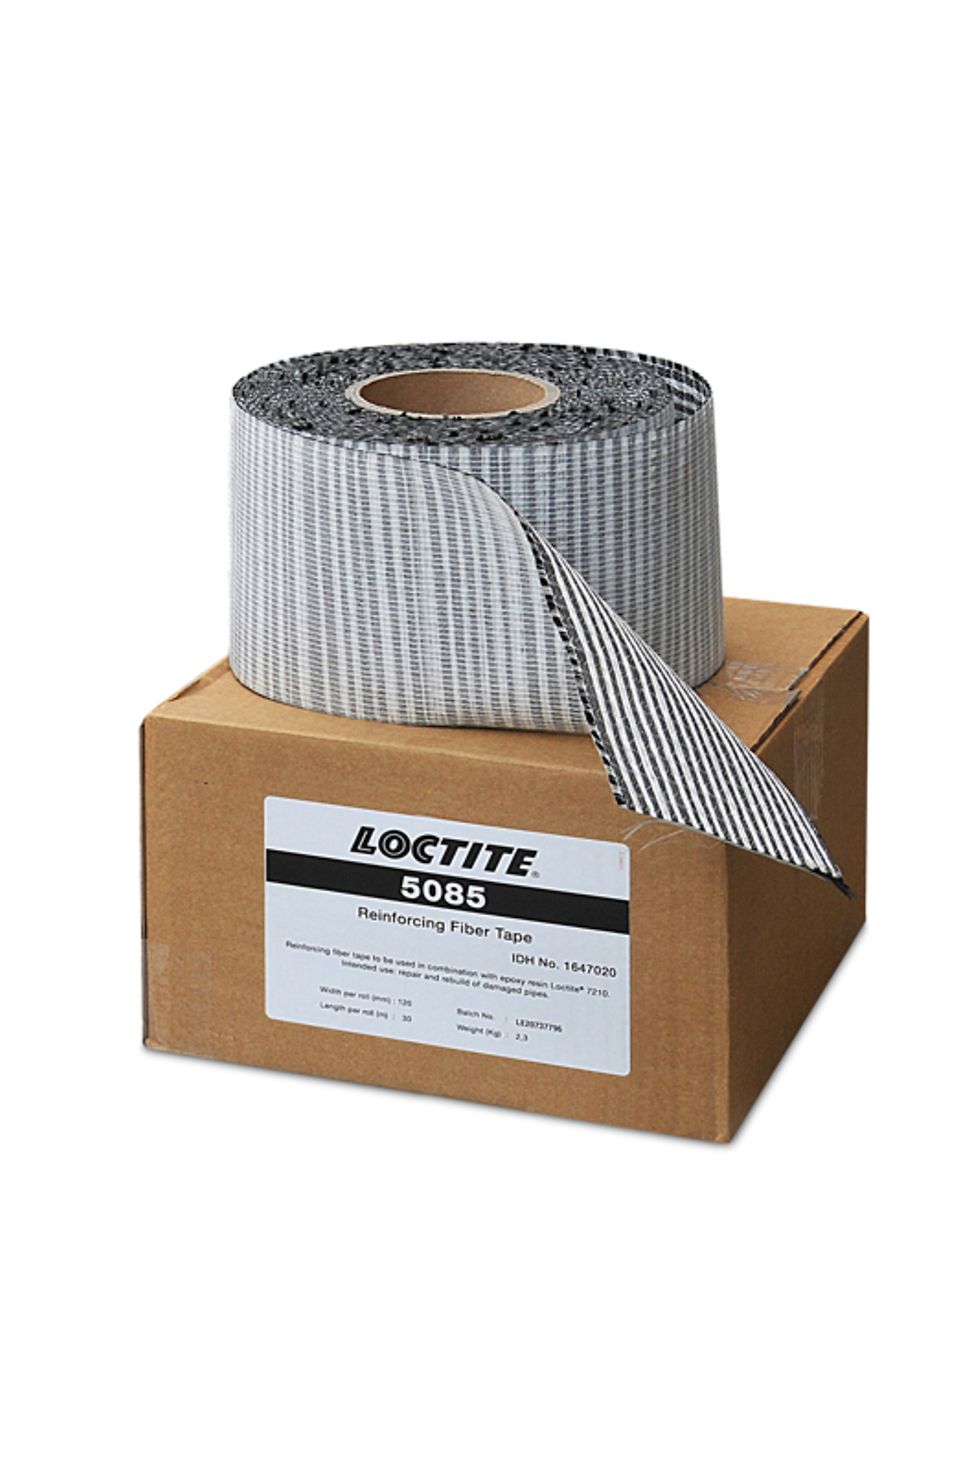  Glass-carbon fibre tape Loctite 5085 